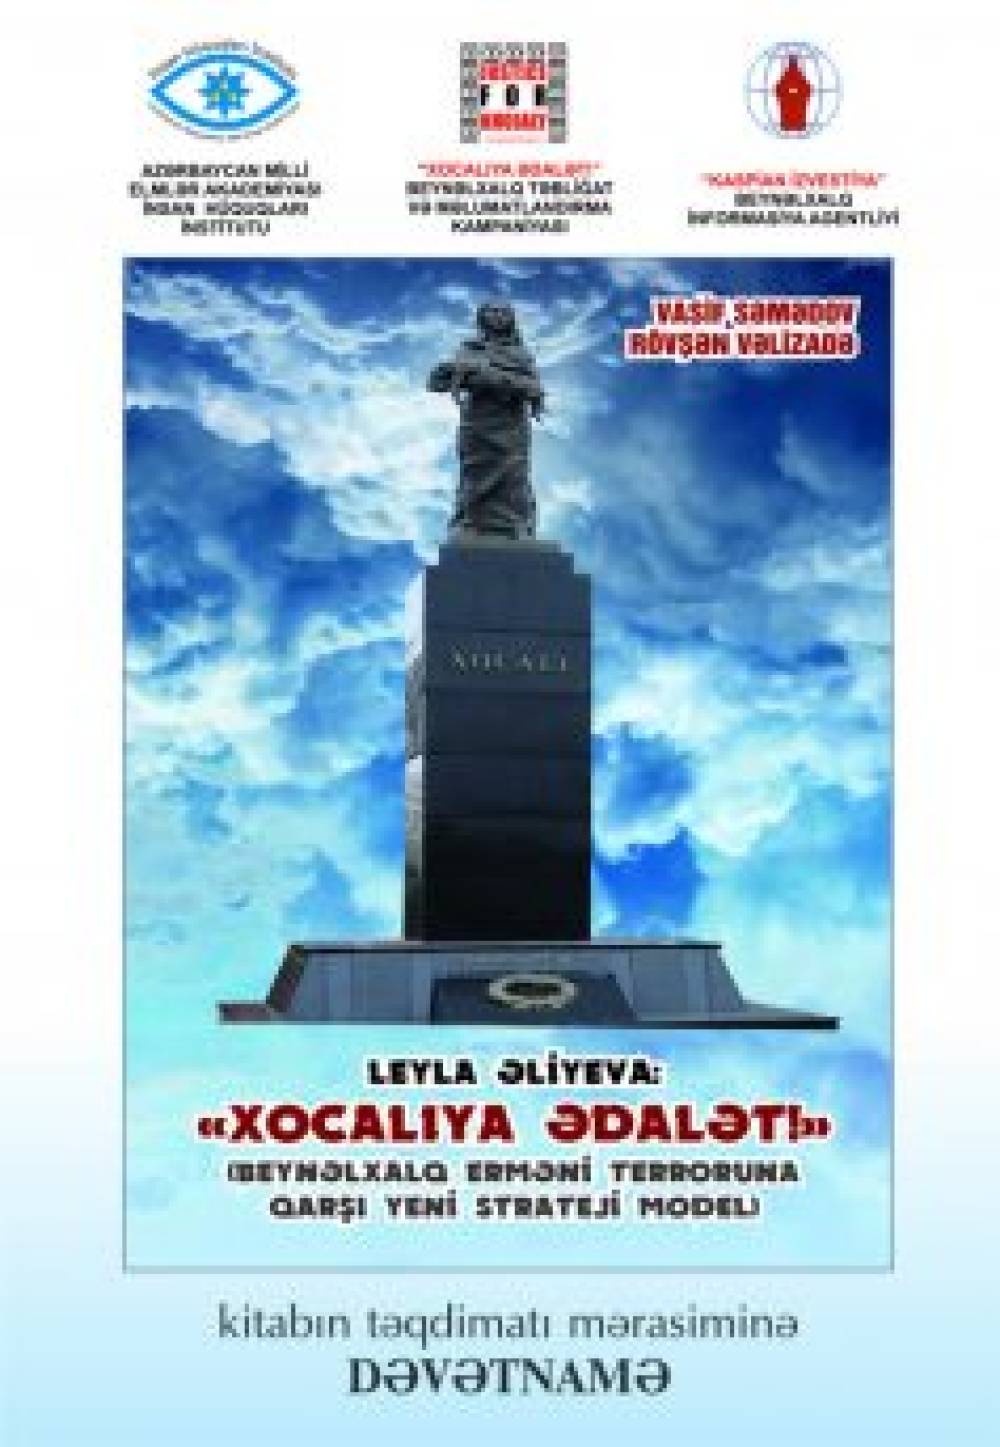 Presentation of the book “Leyla Aliyeva”:“Justice for Khojaly!” (new strategic model against international armenian terrorism)